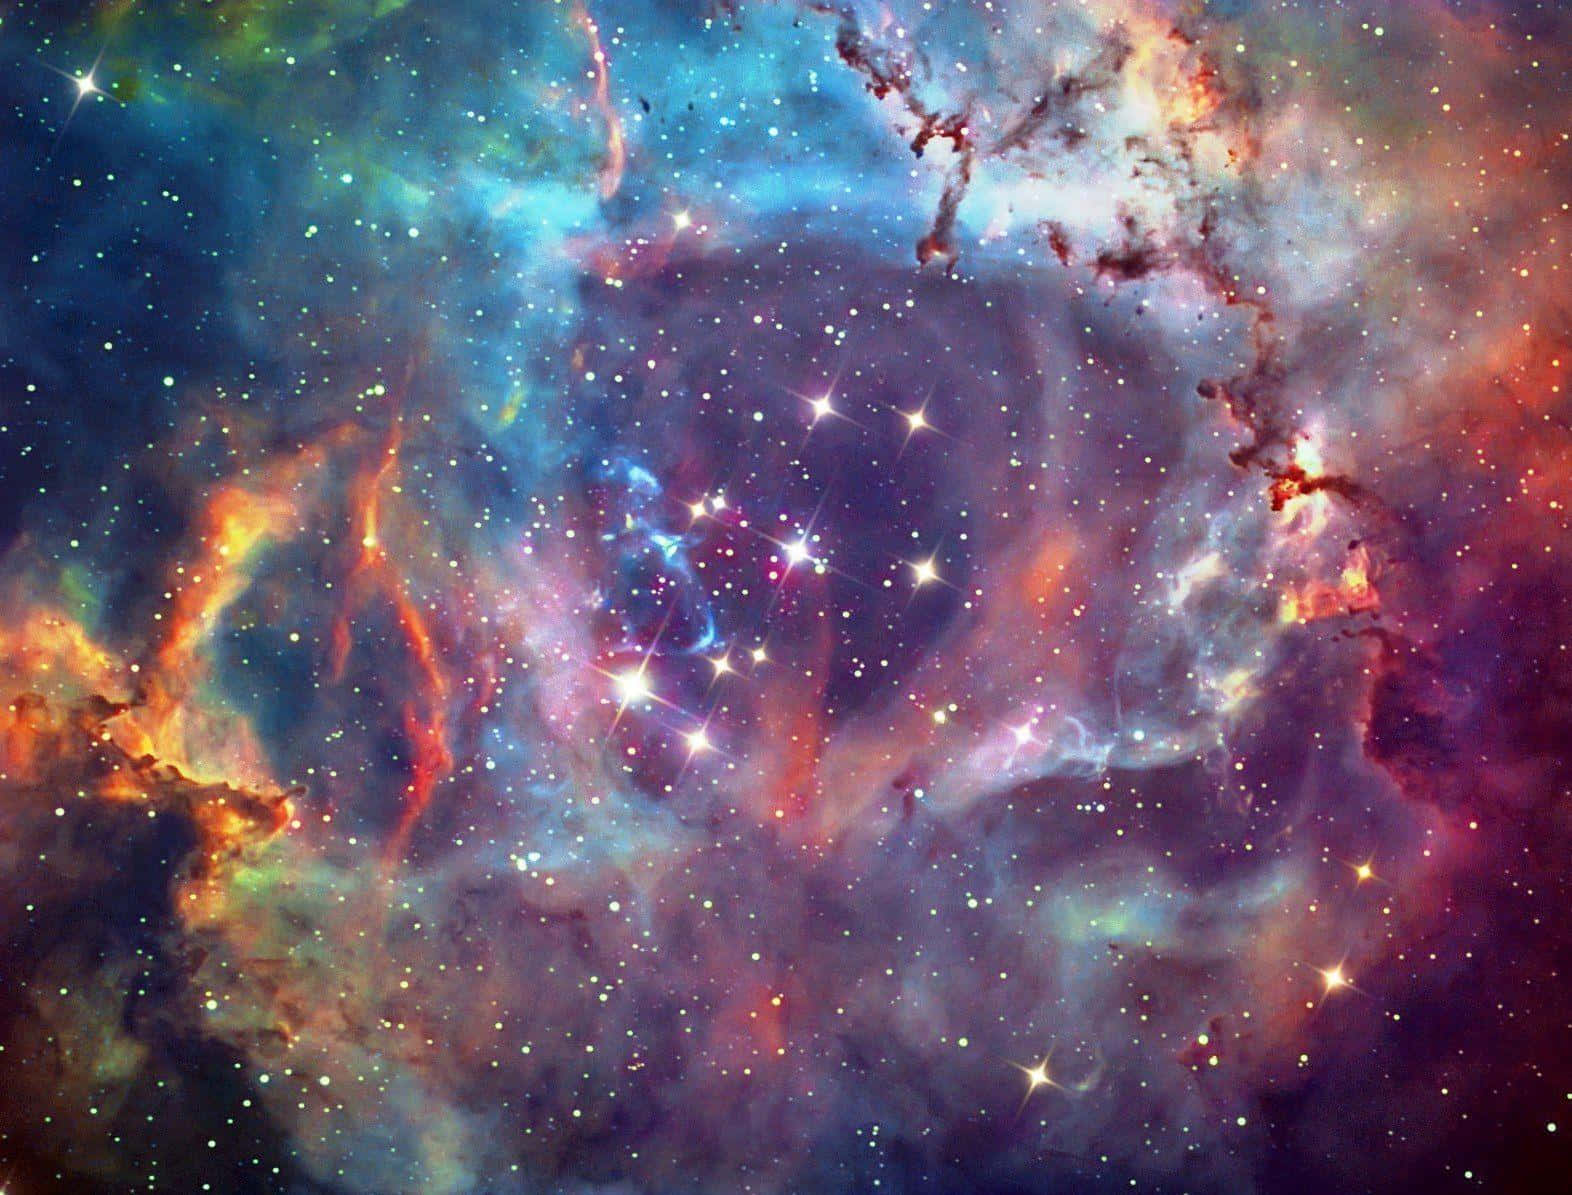 Högupplöstbakgrundsbild Av Galaxen Rosette-nebulosan.